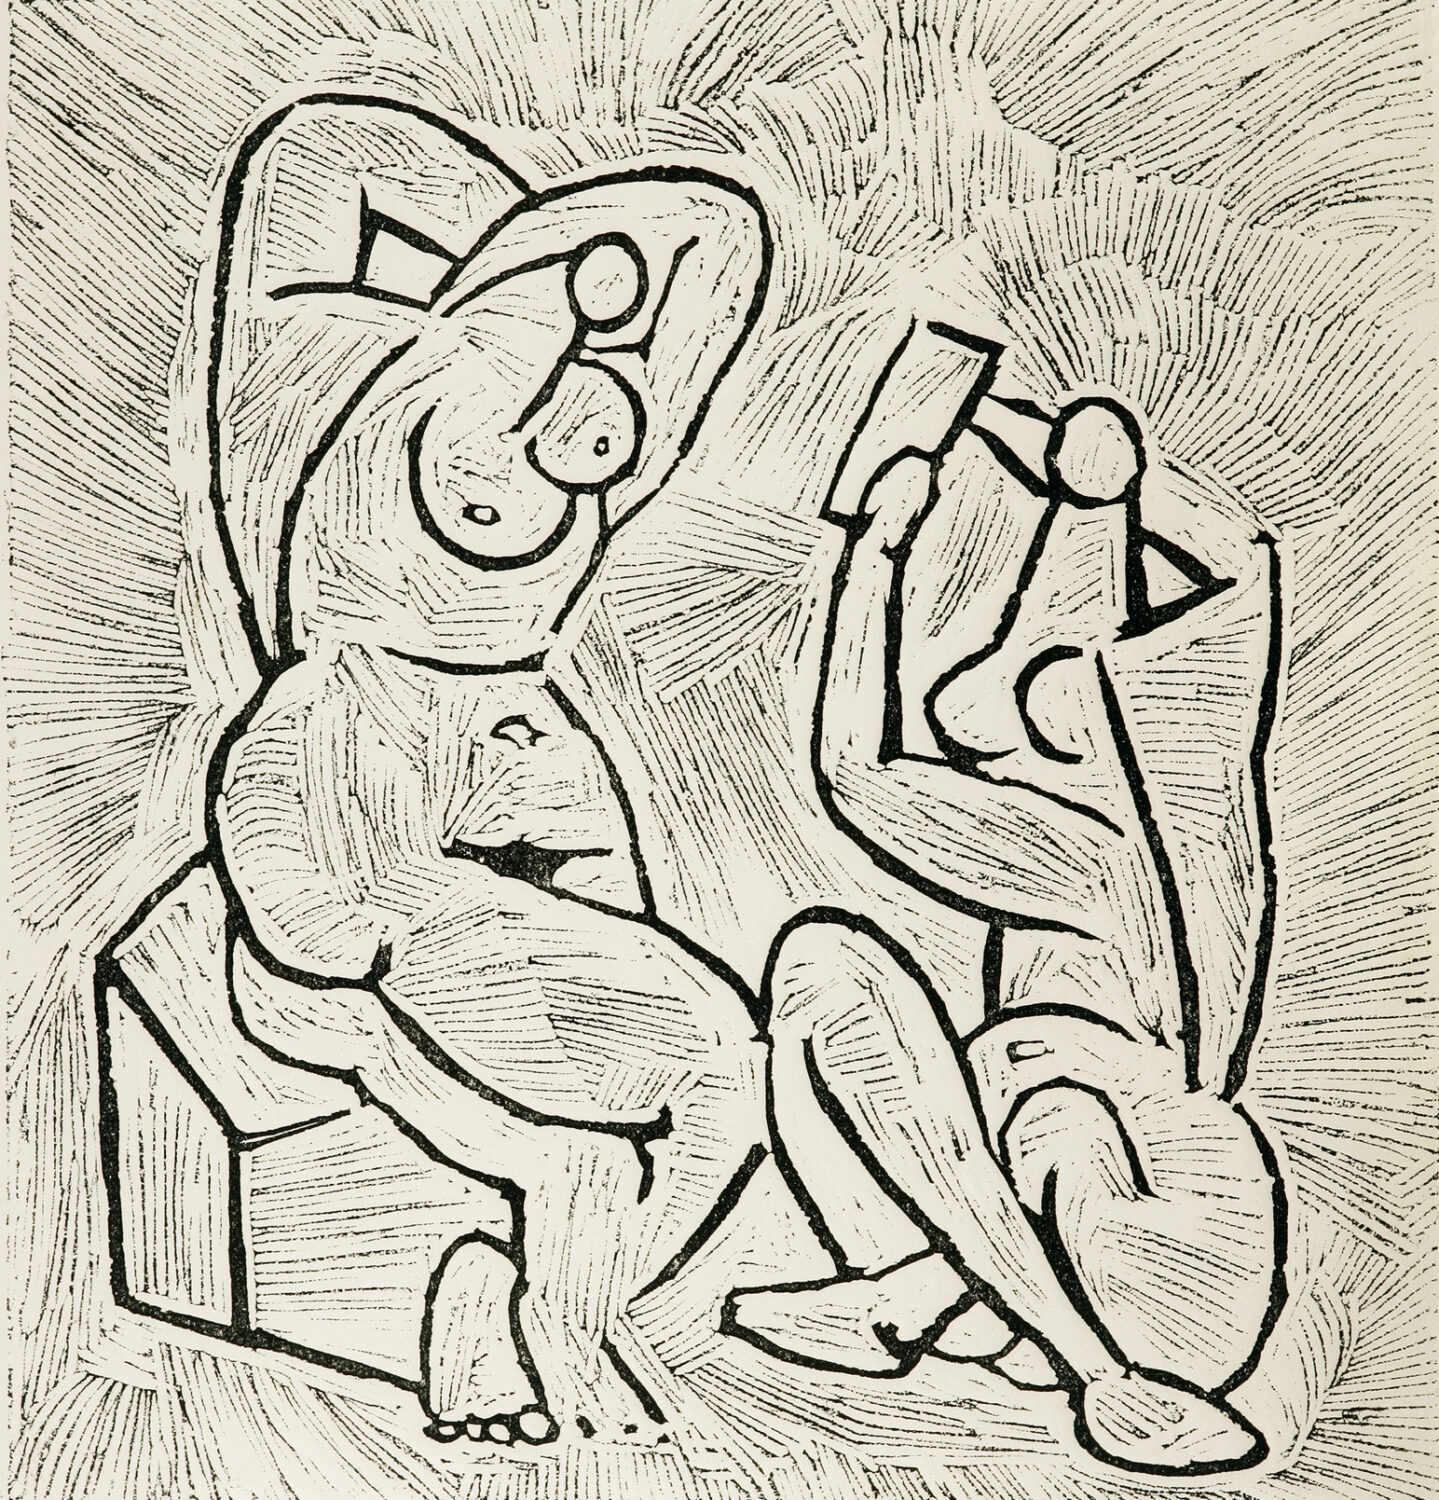 thumbnail of Lino-cut by Pablo Picasso titled Femmes a Leur Toilette.